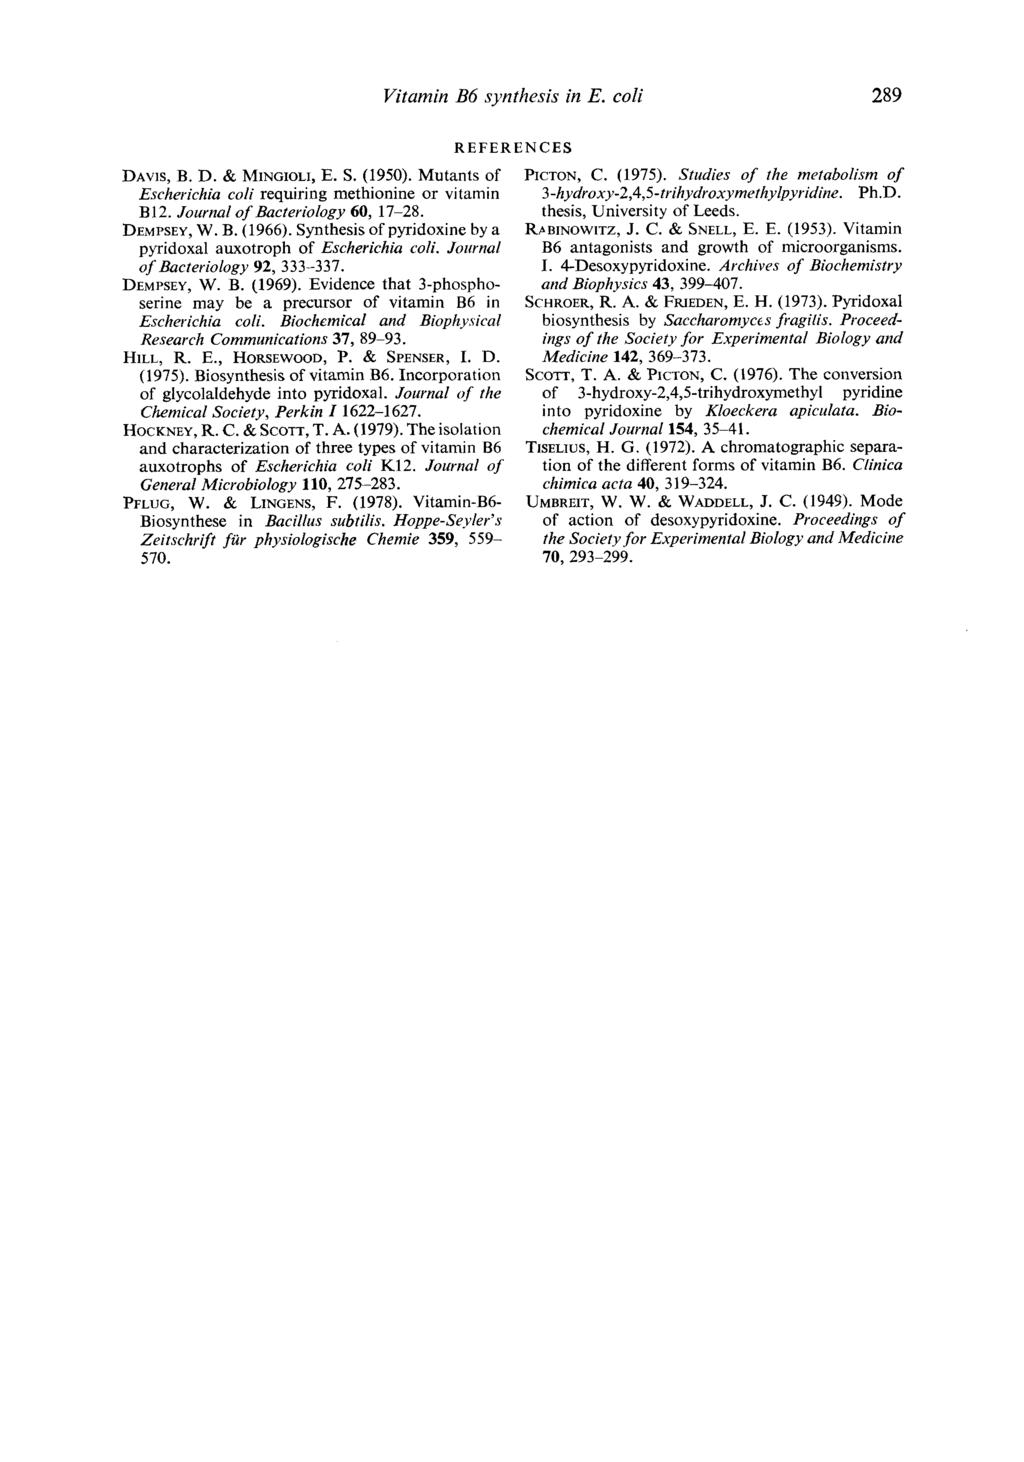 Vitamin B6 synthesis in E. coli 289 REFERENCES DAVIS, B. D. & hiingiol1, E. S. (1950). Mutants of Escherichia coli requiring methionine or vitamin B12. Journal of Bacteriology 60, 17-28. DEMPSEY, W.